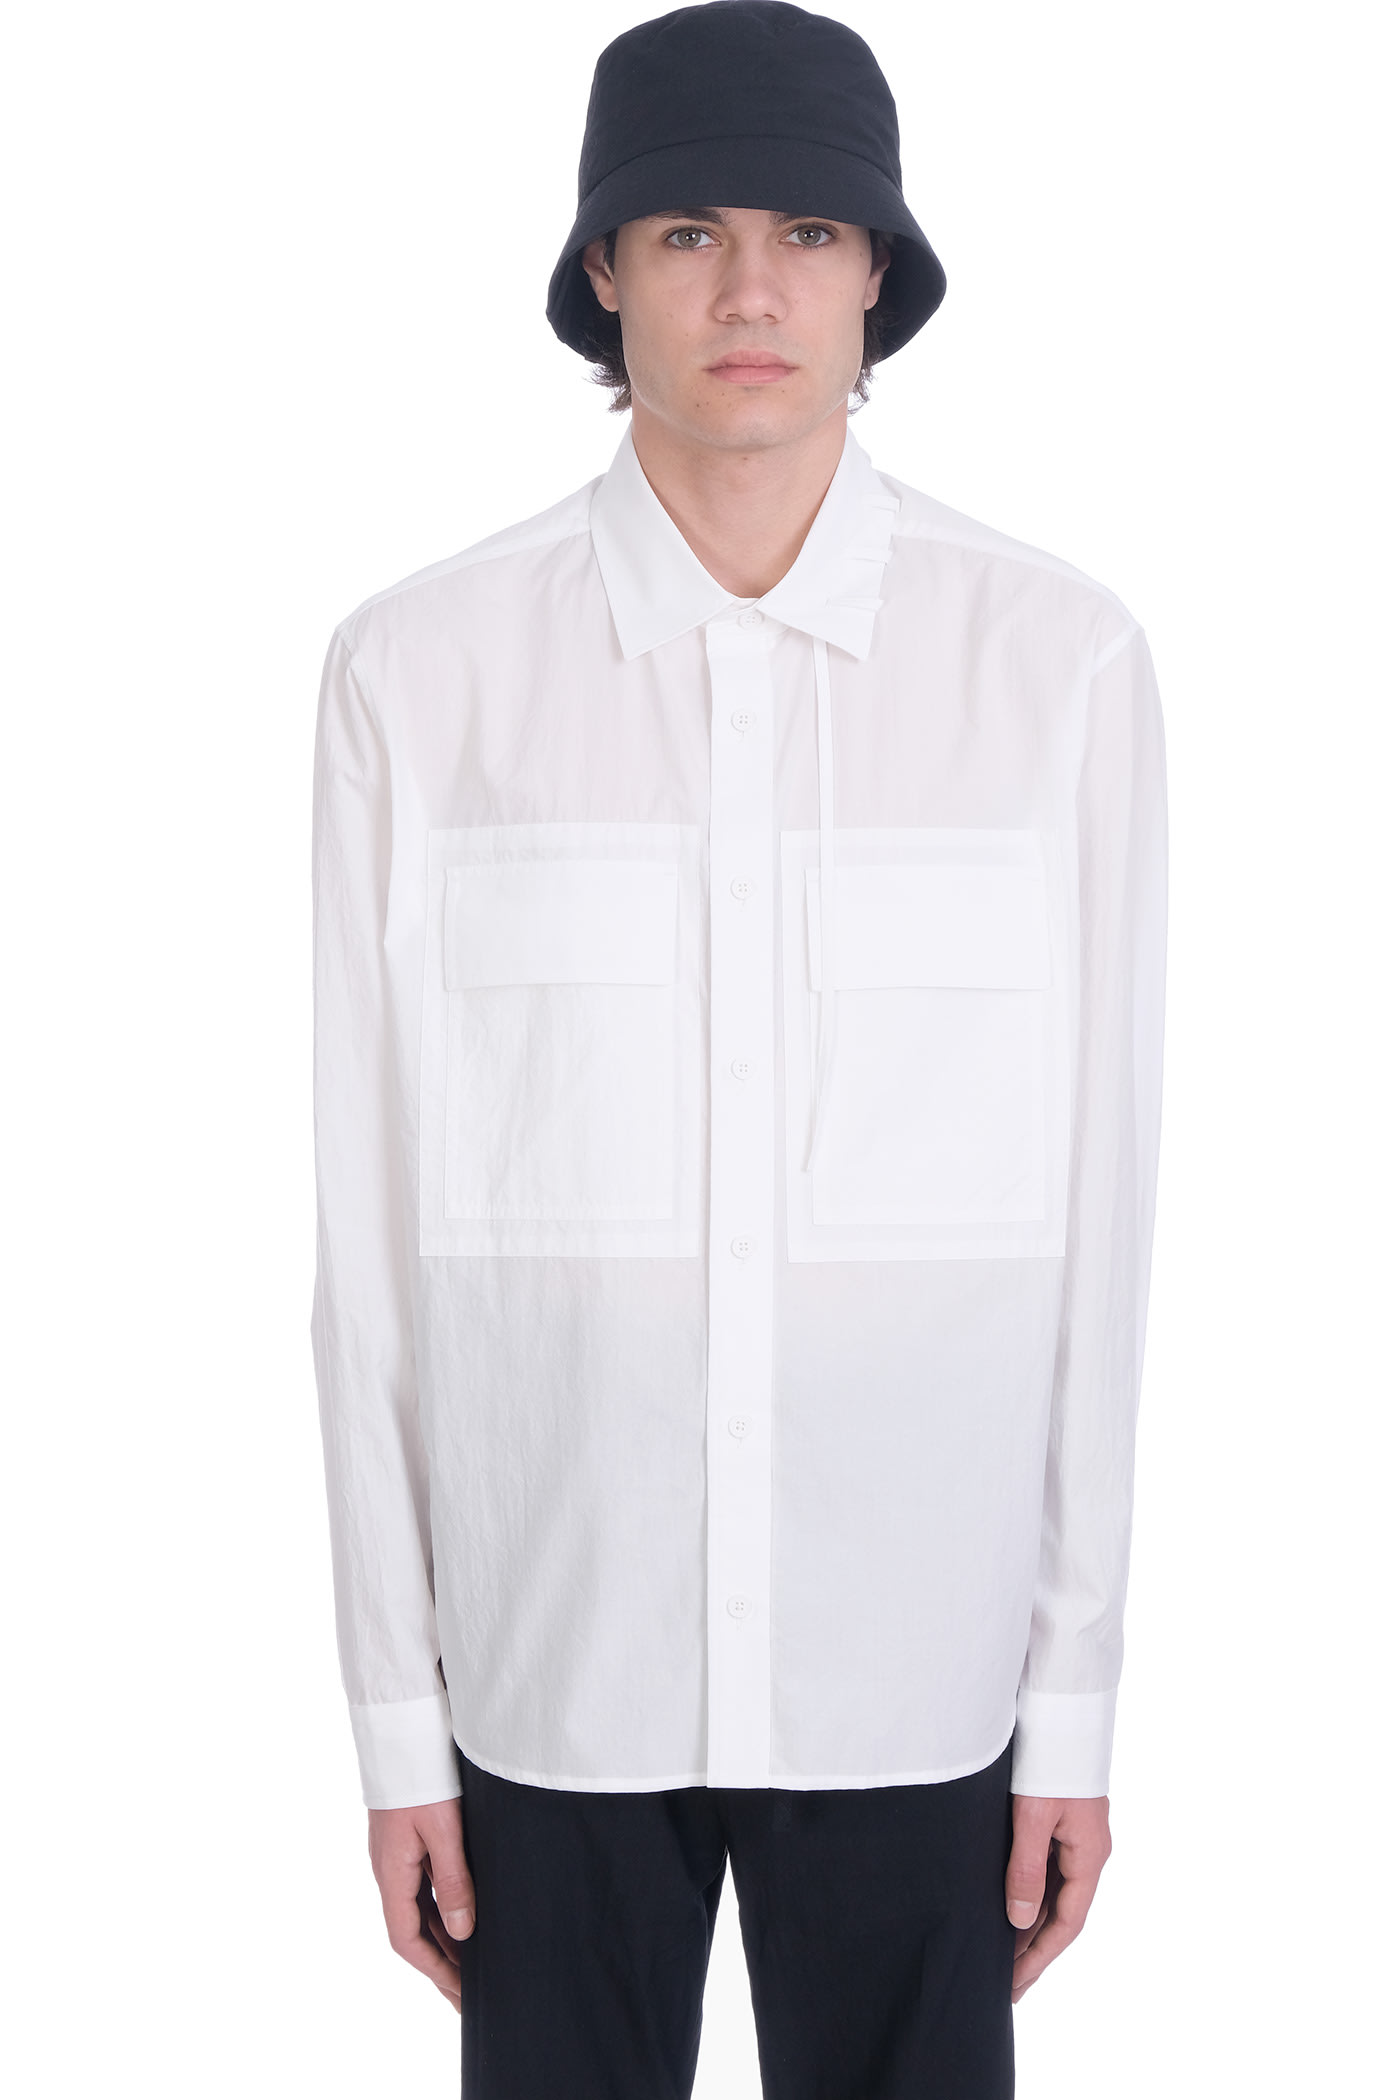 Craig Green Shirt In White Cotton